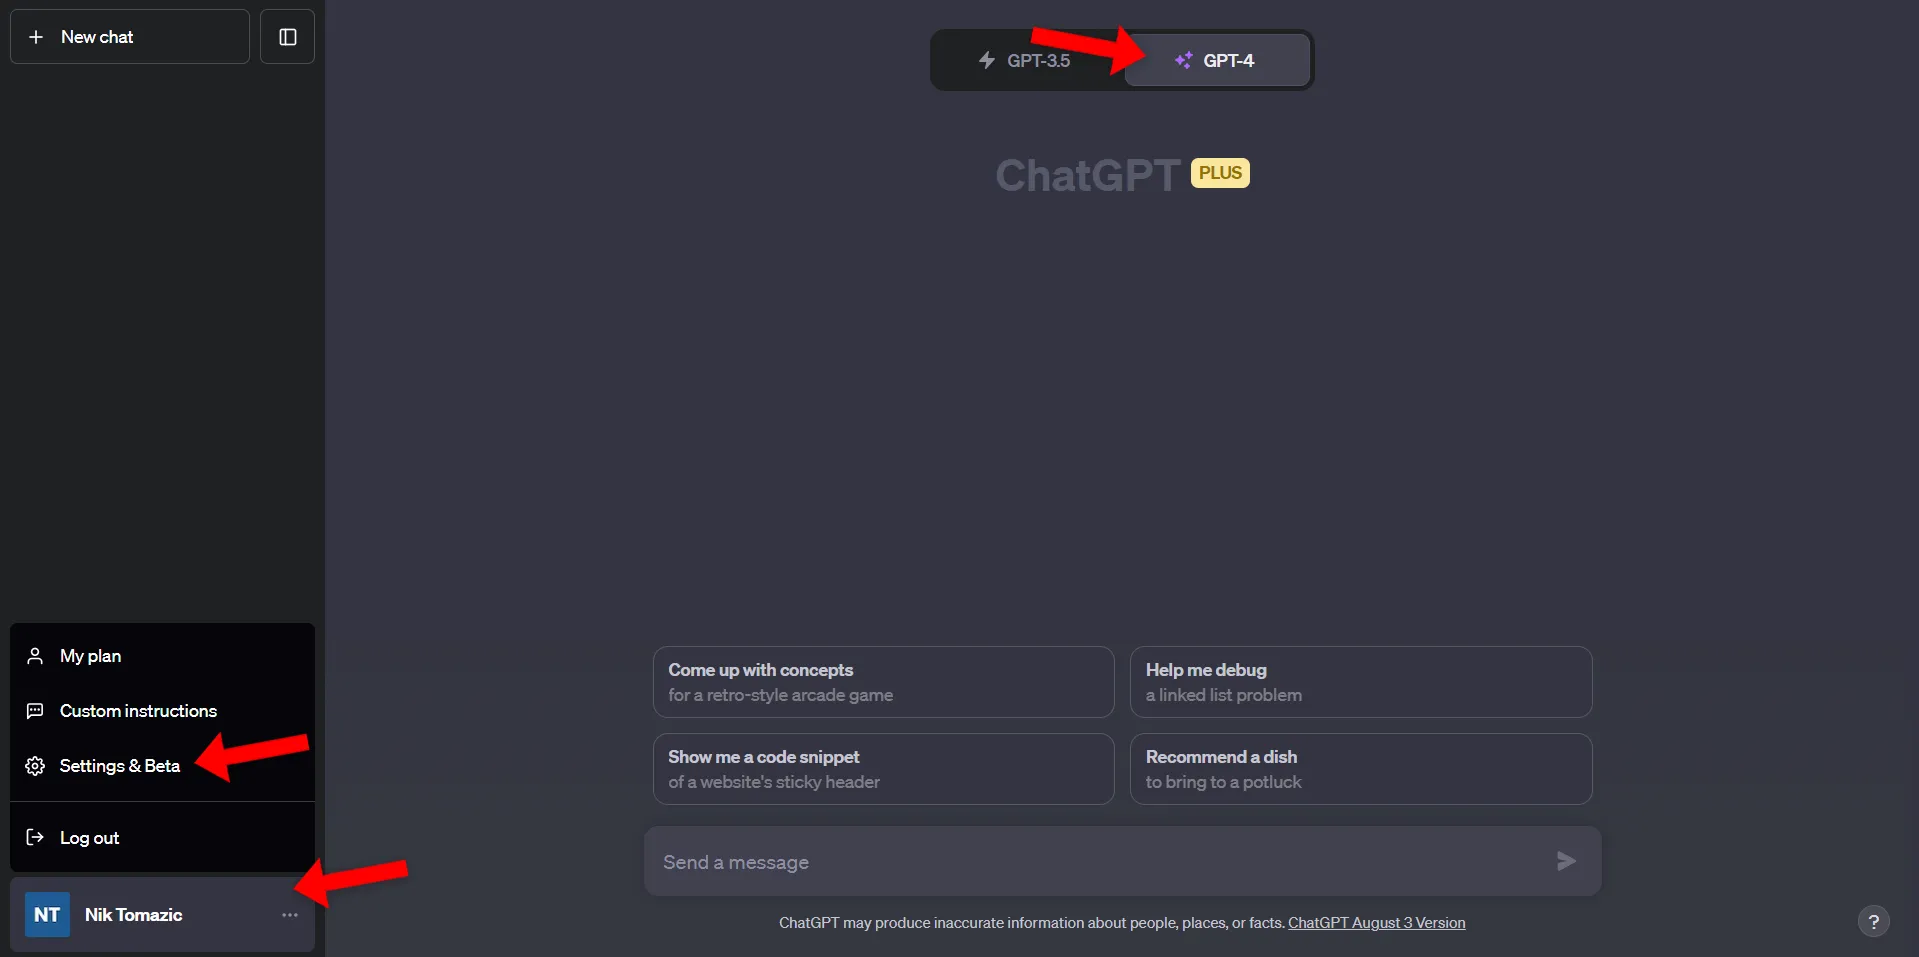 ChatGPT Plus Enable GPT-4